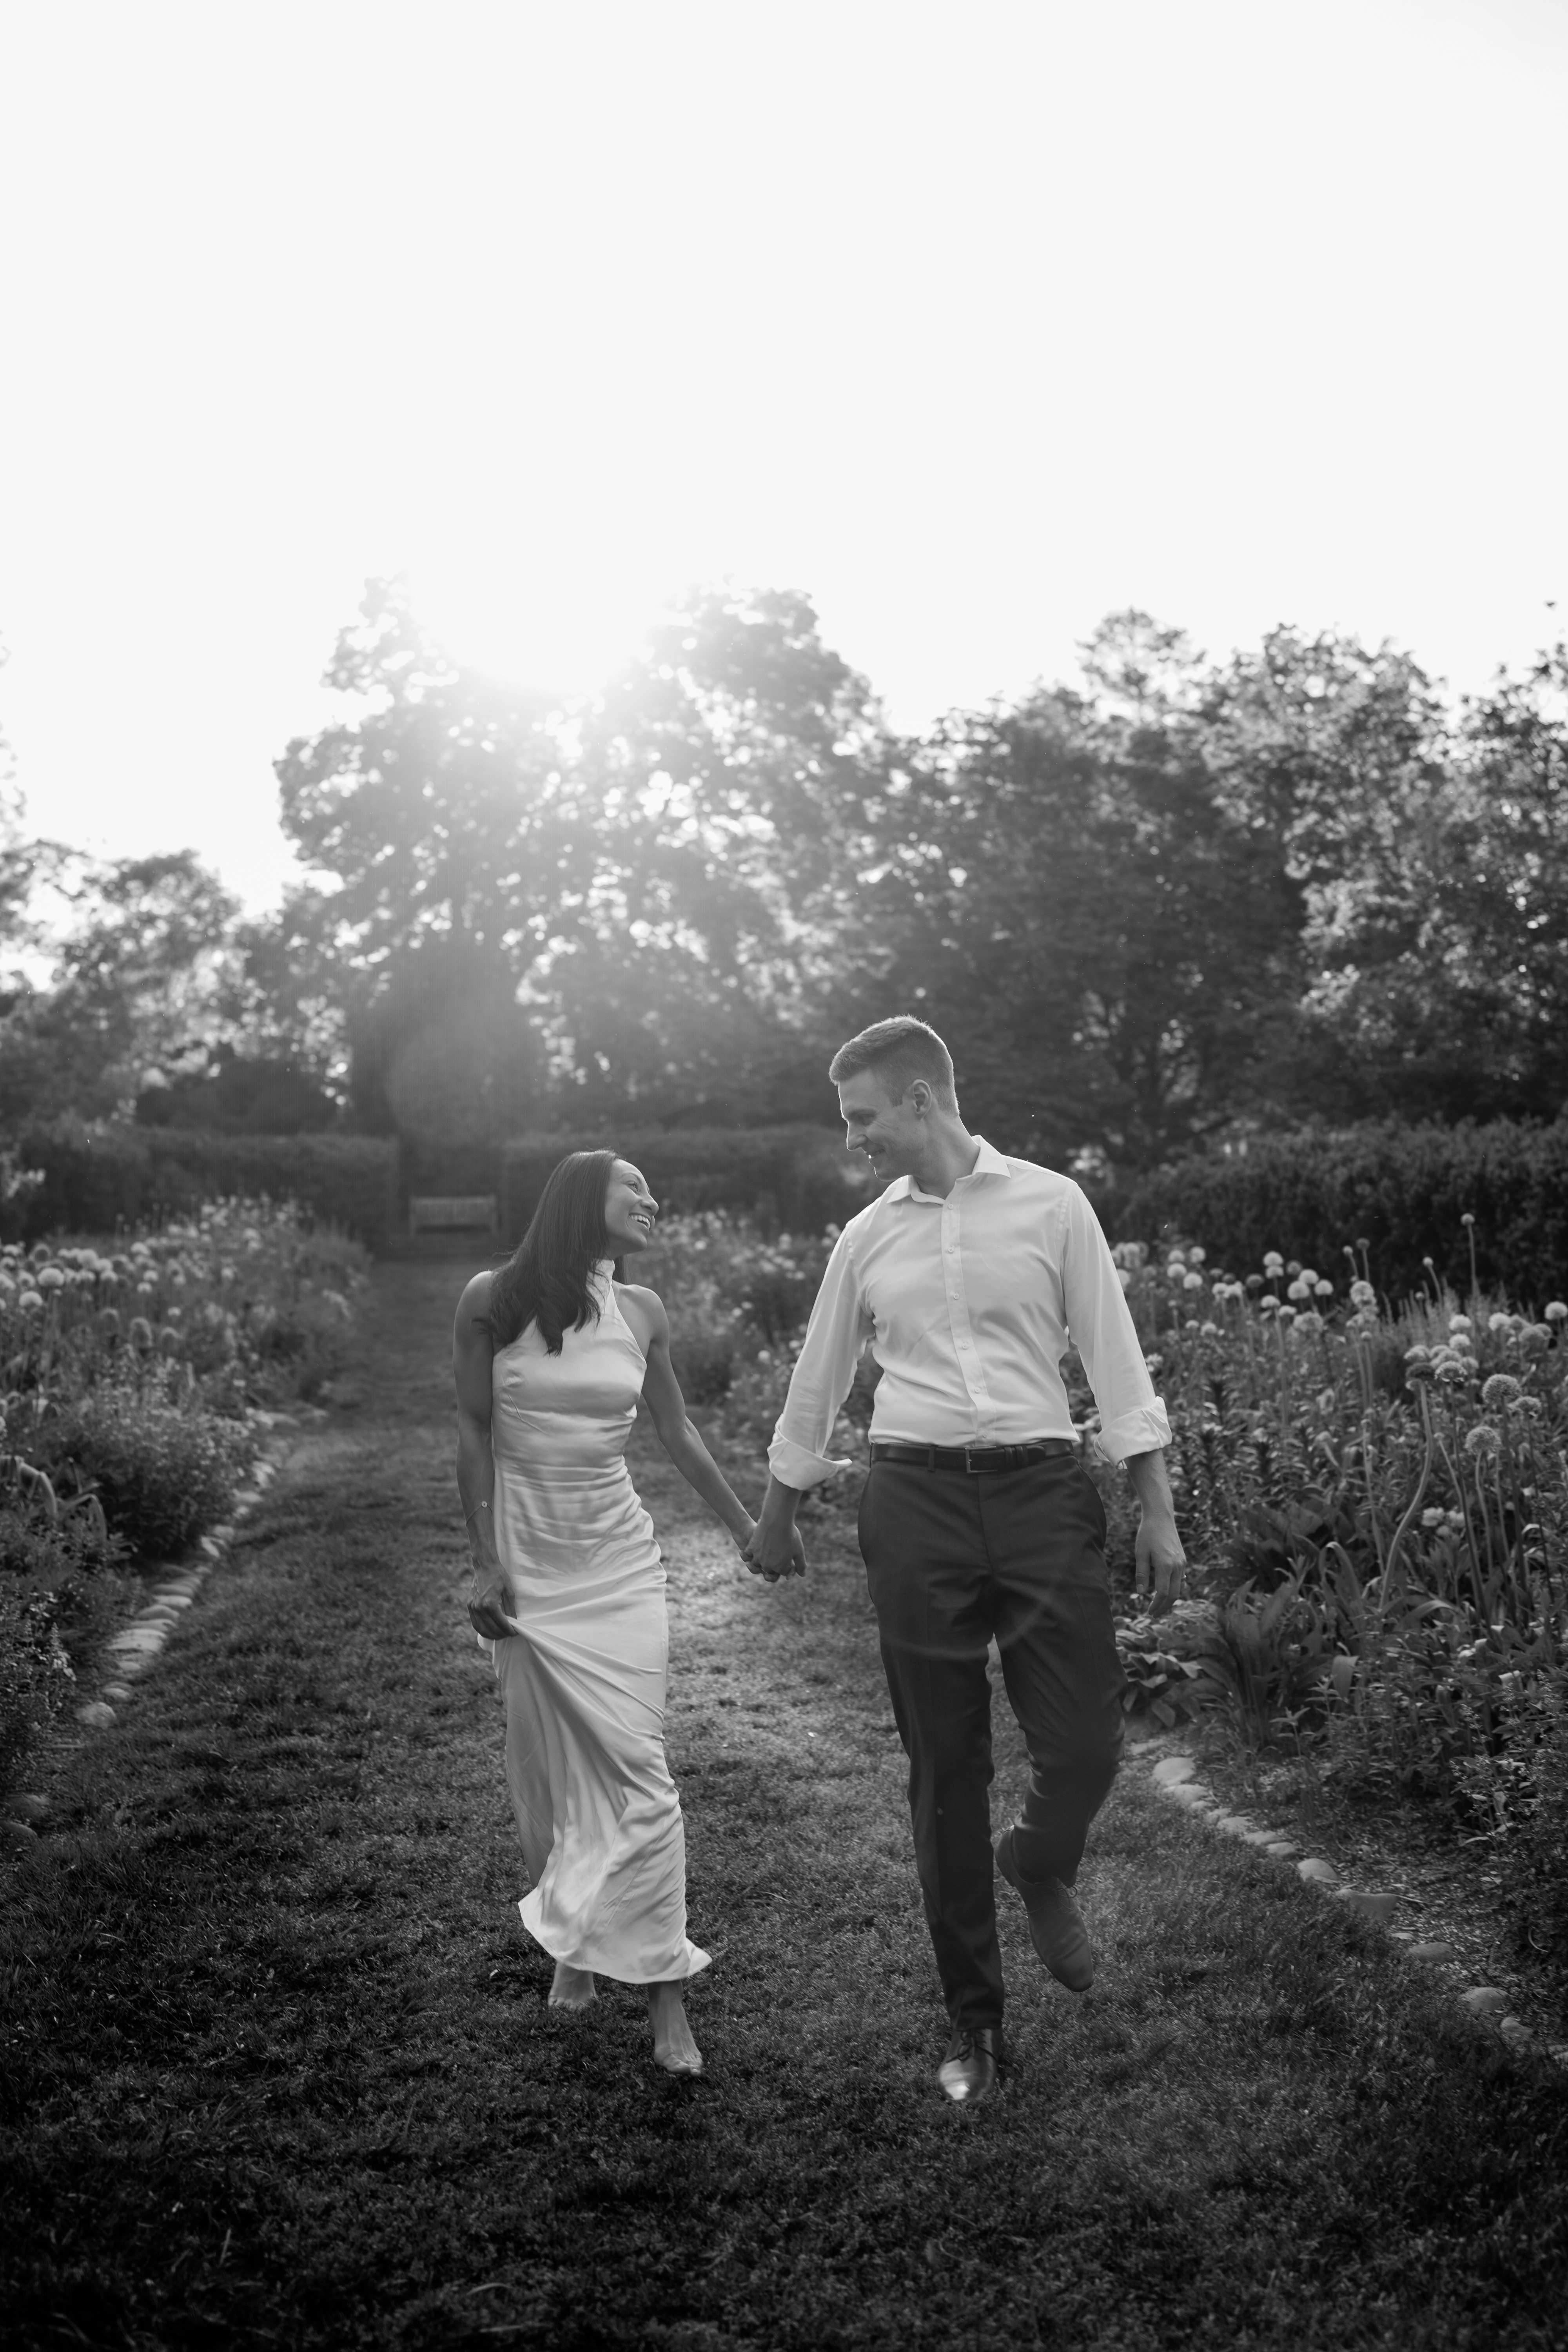 Spring Dumbarton Oaks Garden Engagement Session District of Columbia Wedding Photographer